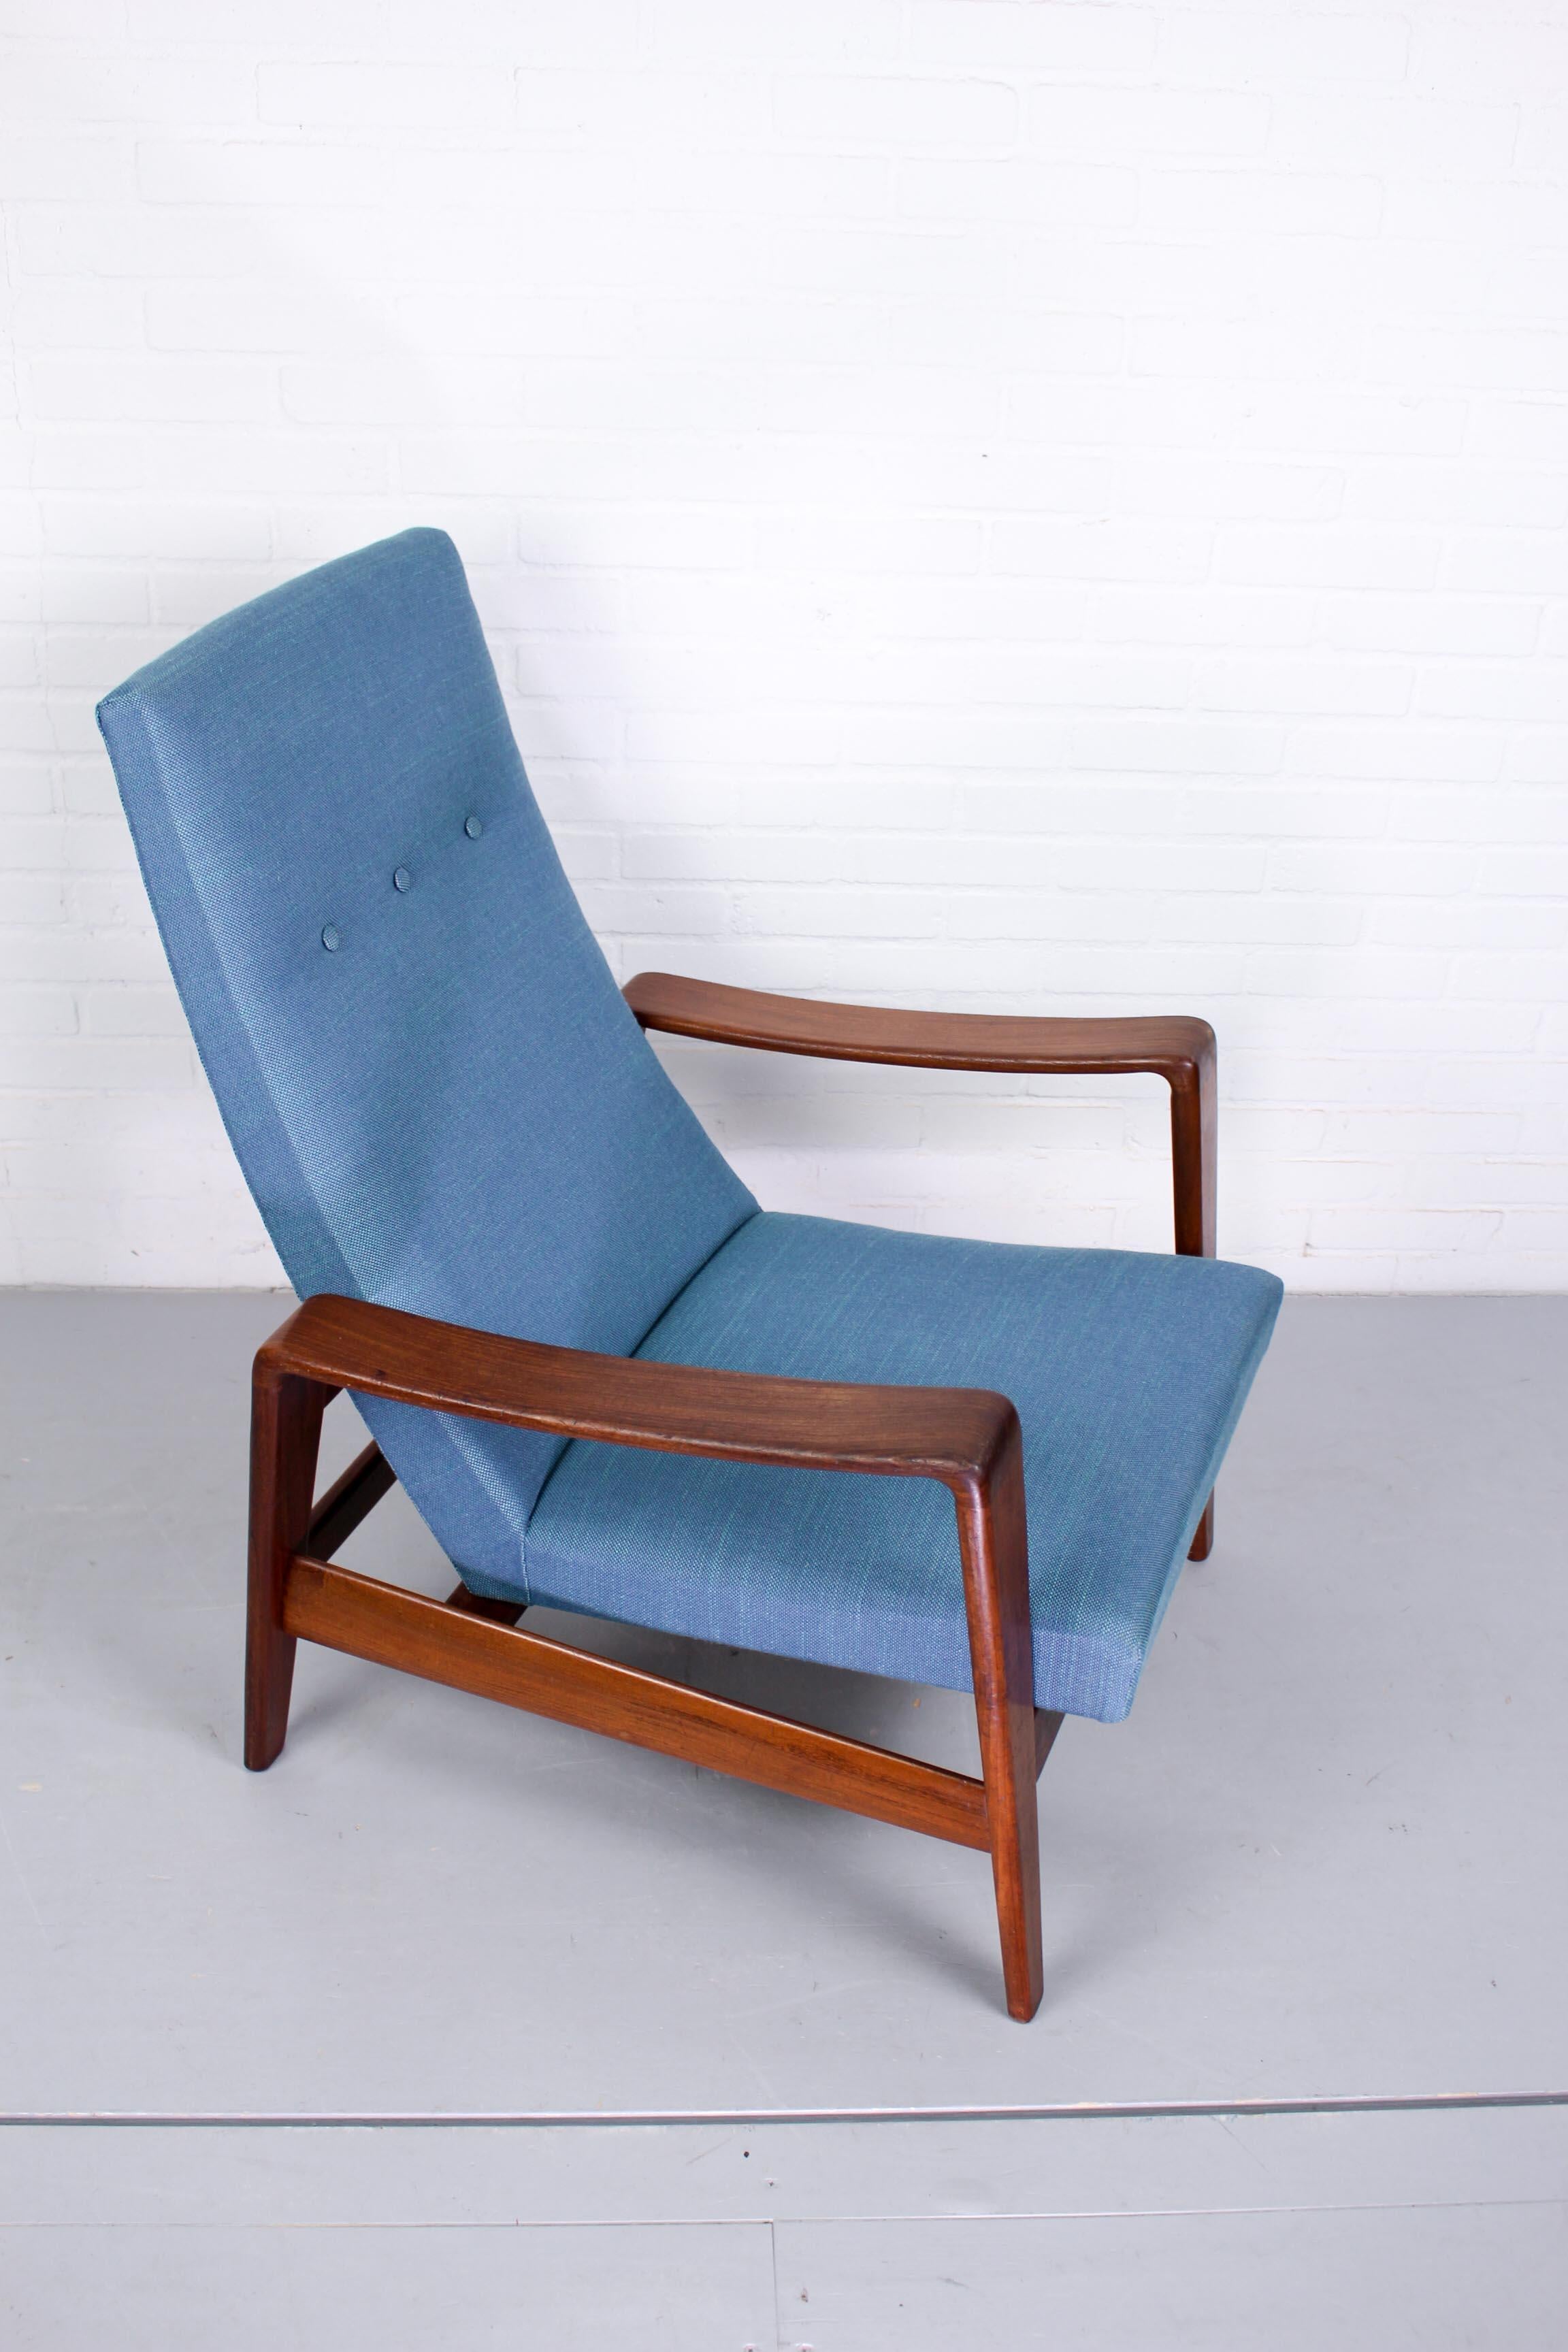 Mid-Century Modern Lounge Chair by Arne Wahl Iversen for Komfort, 1960s